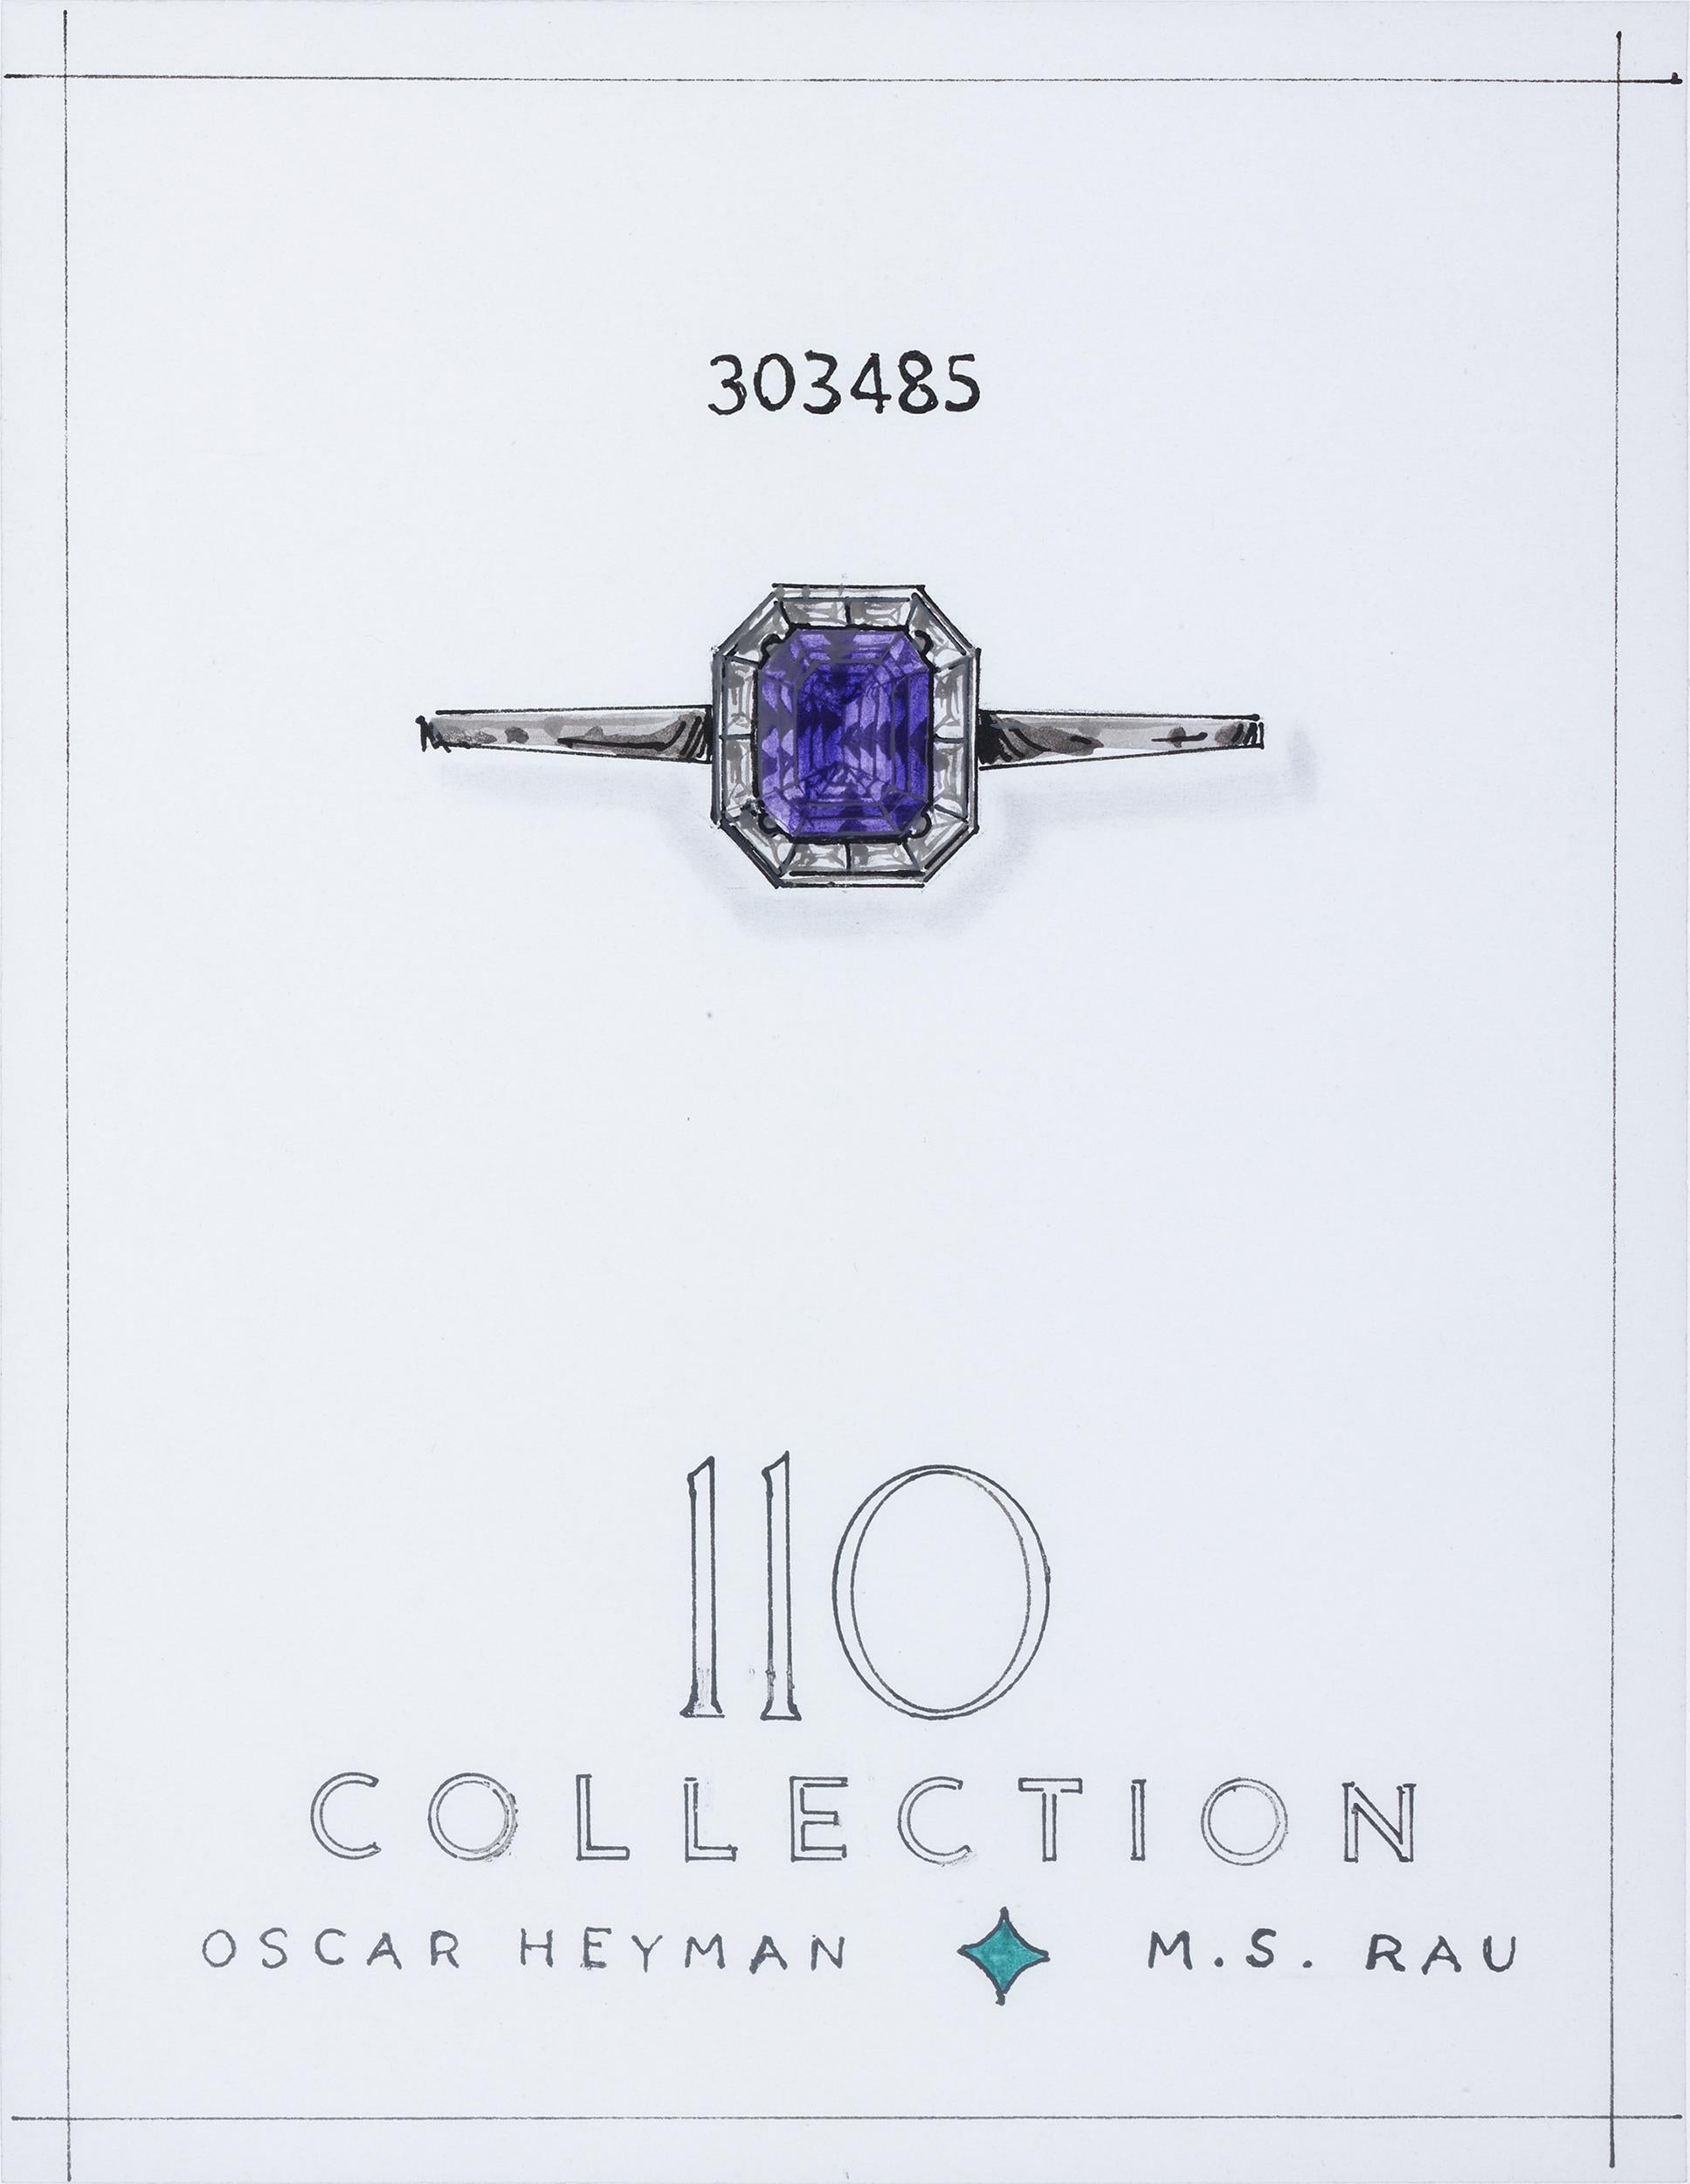 Octagon Cut 110 Collection Purple Ceylon Sapphire Ring, 10.86 Carats